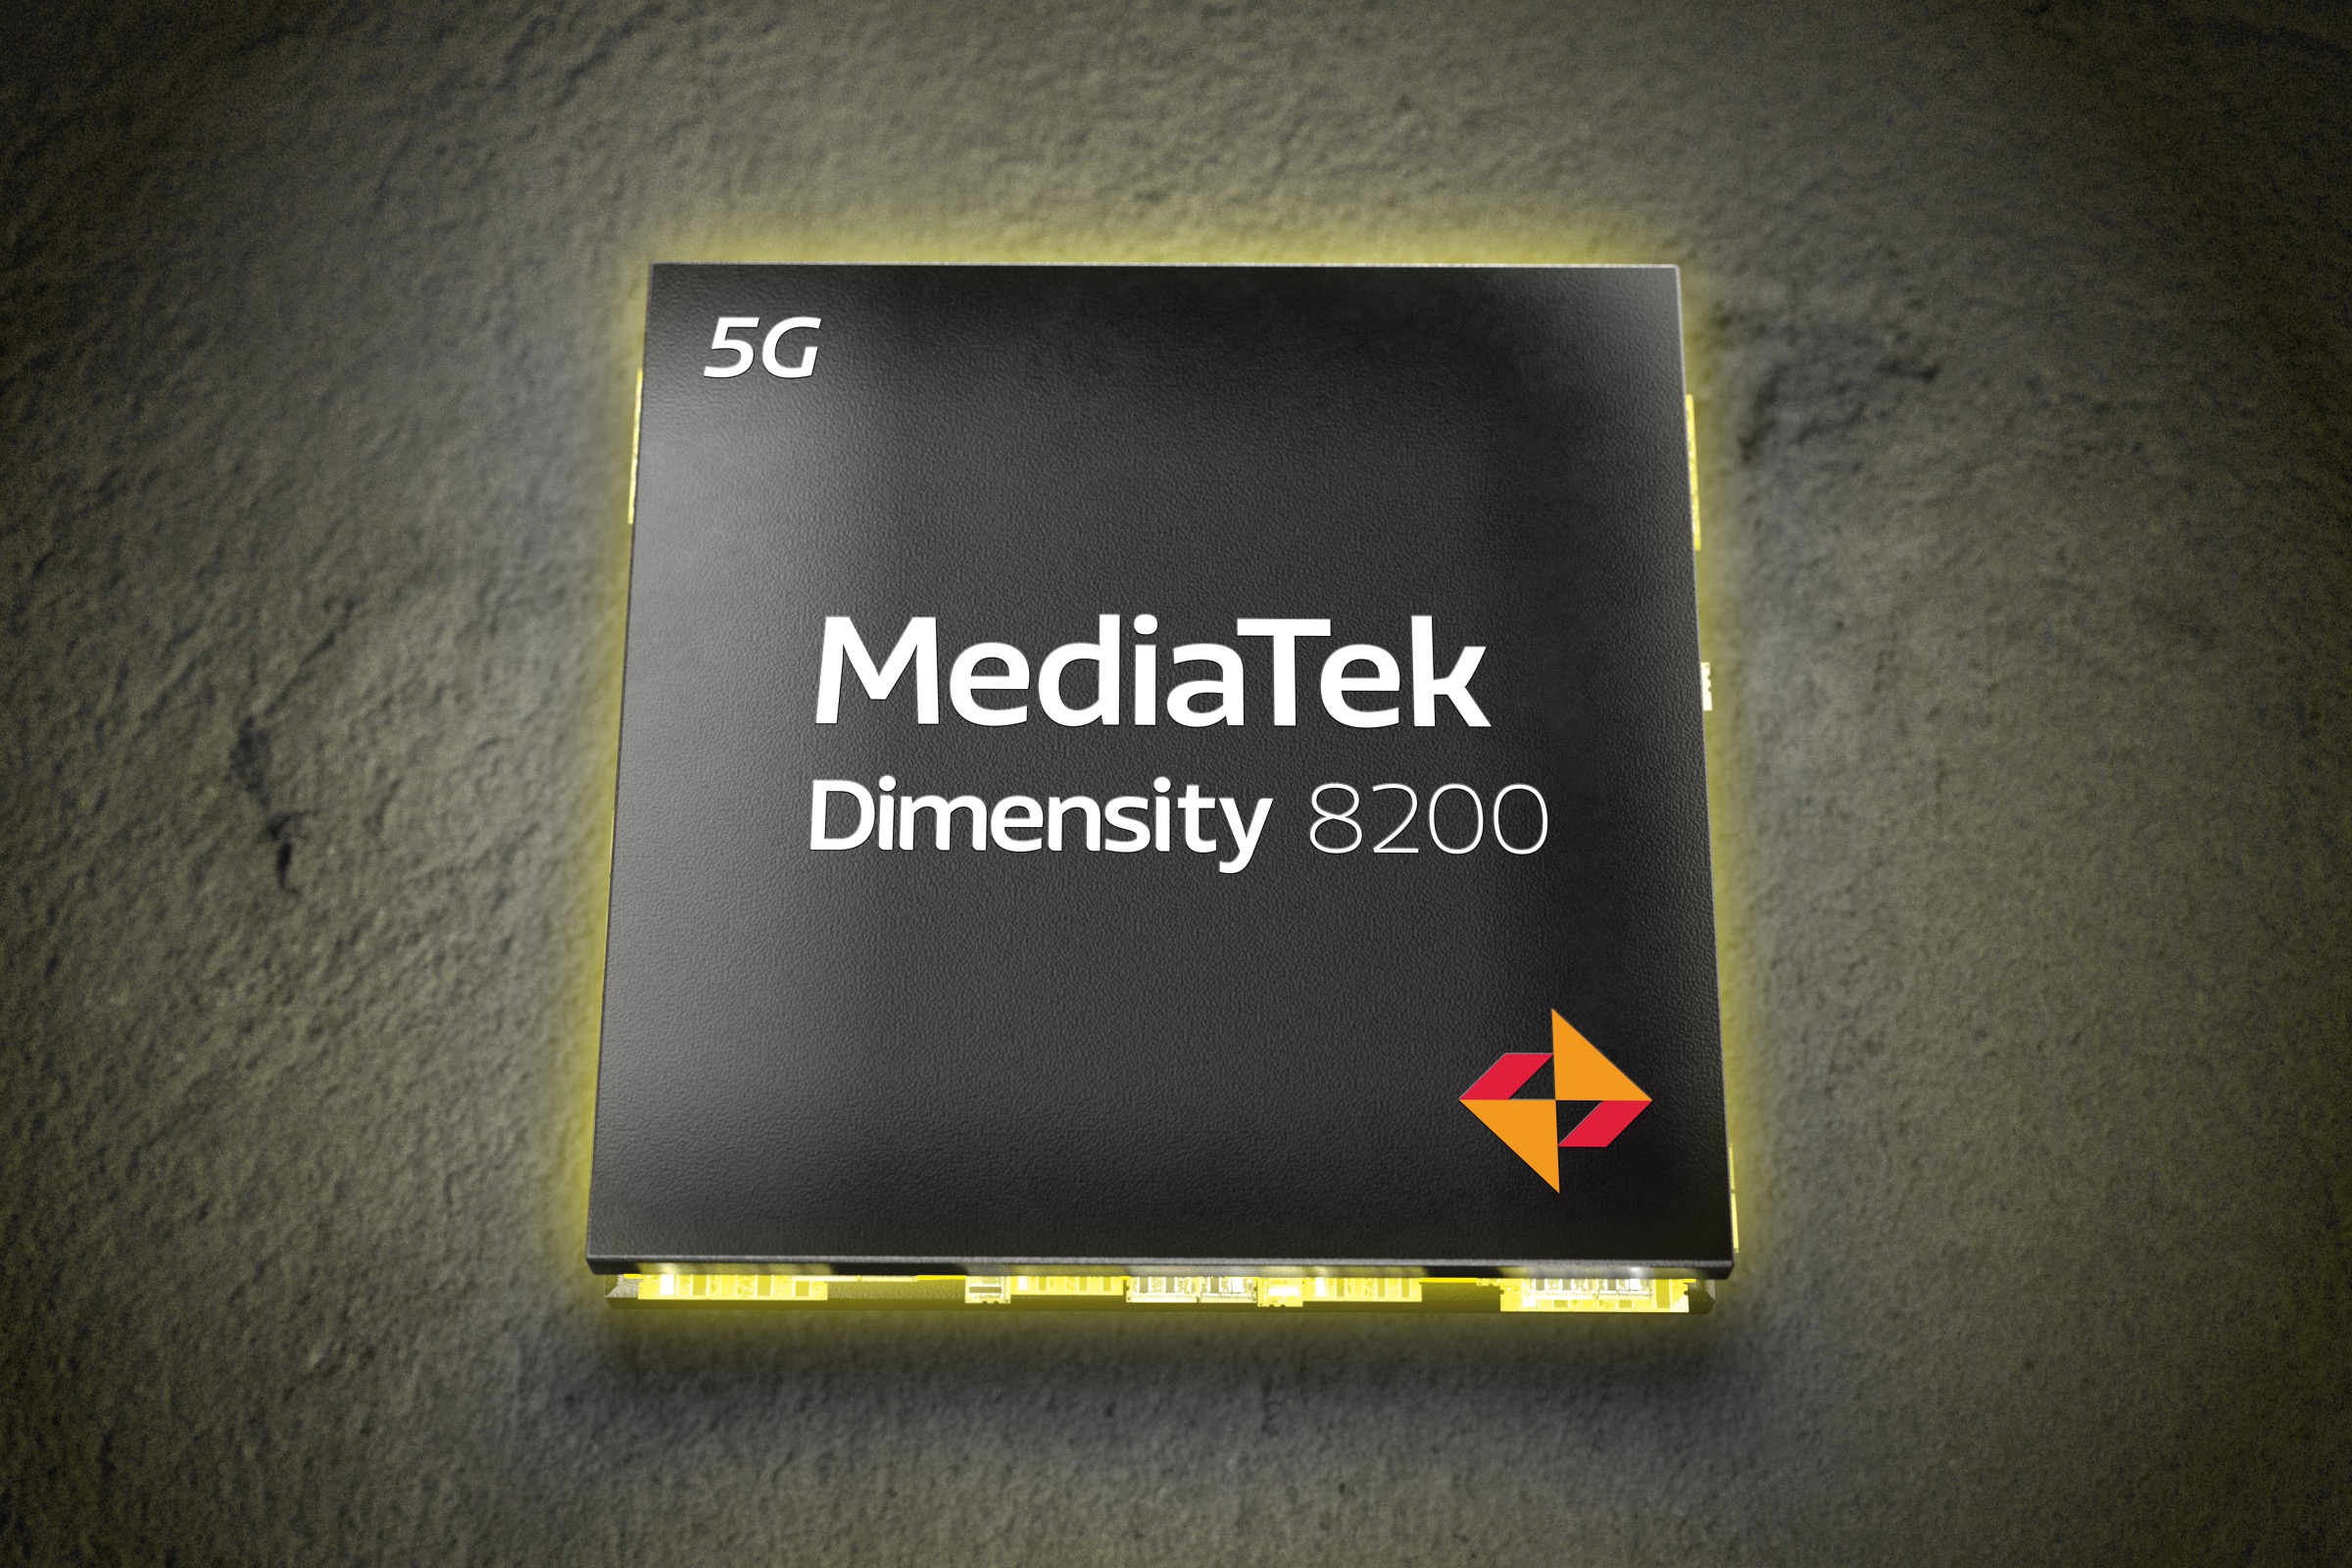 Official render of the MediaTek 8200 SoC.